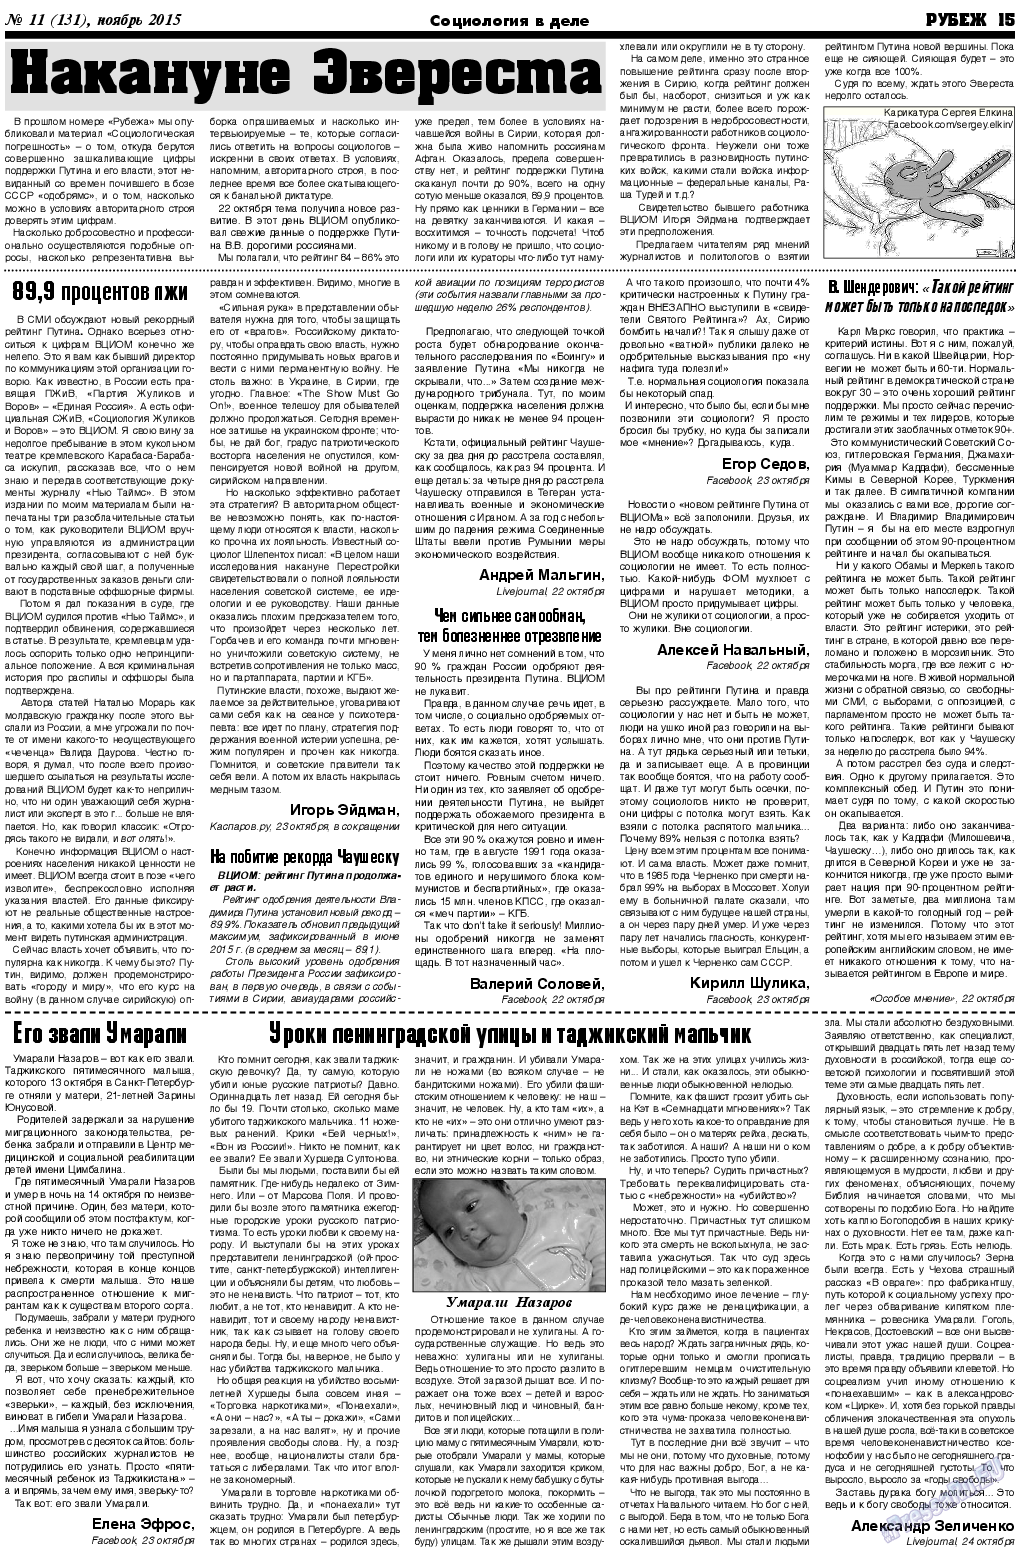 Рубеж, газета. 2015 №11 стр.15